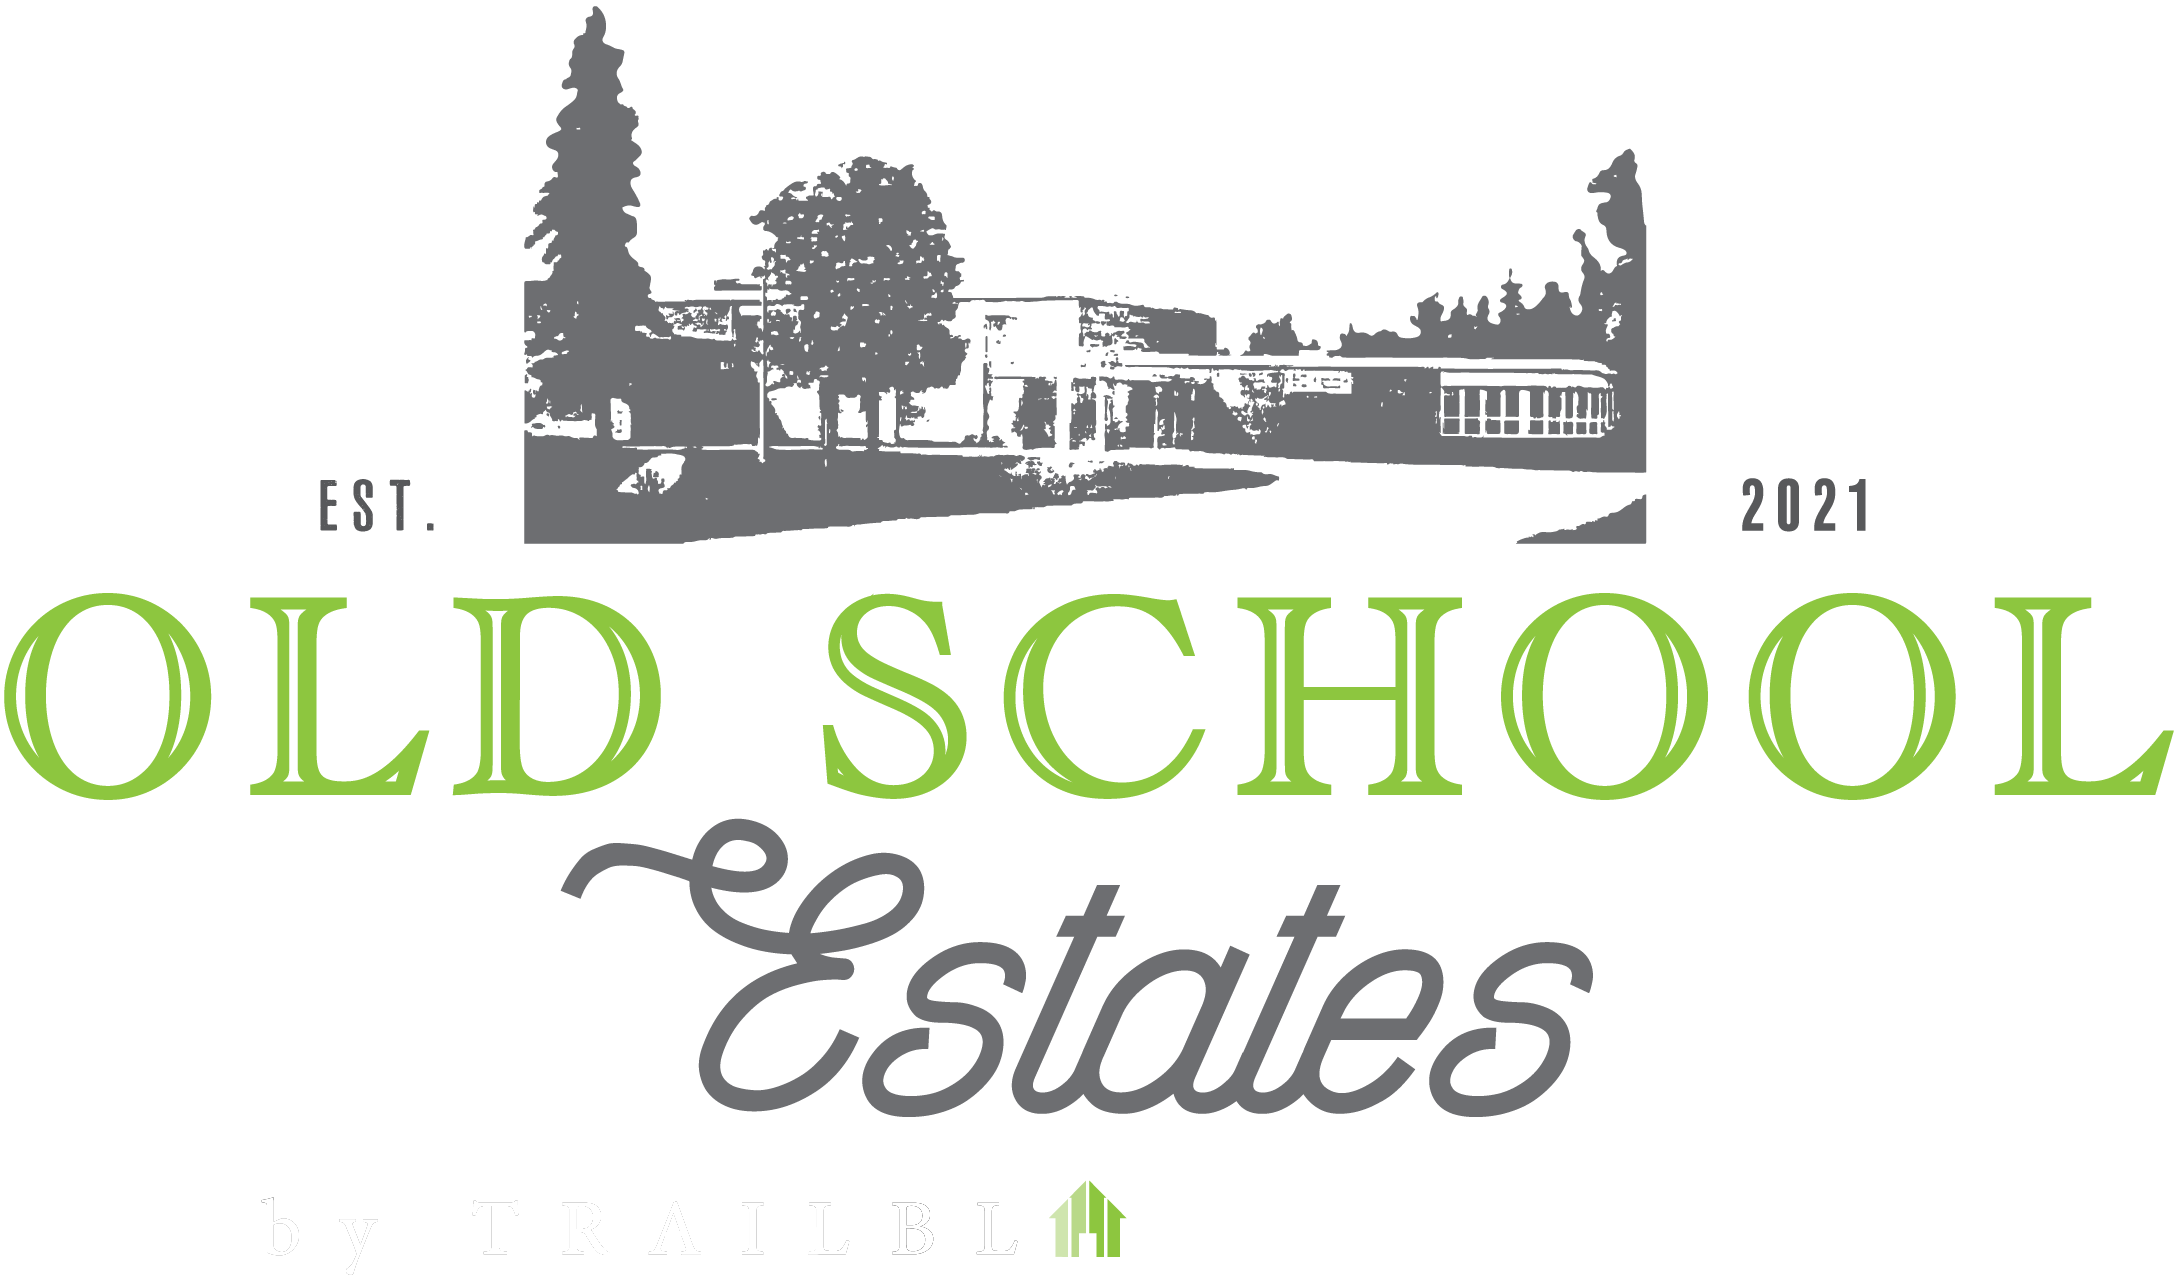 Trailblazer Homes logo in white